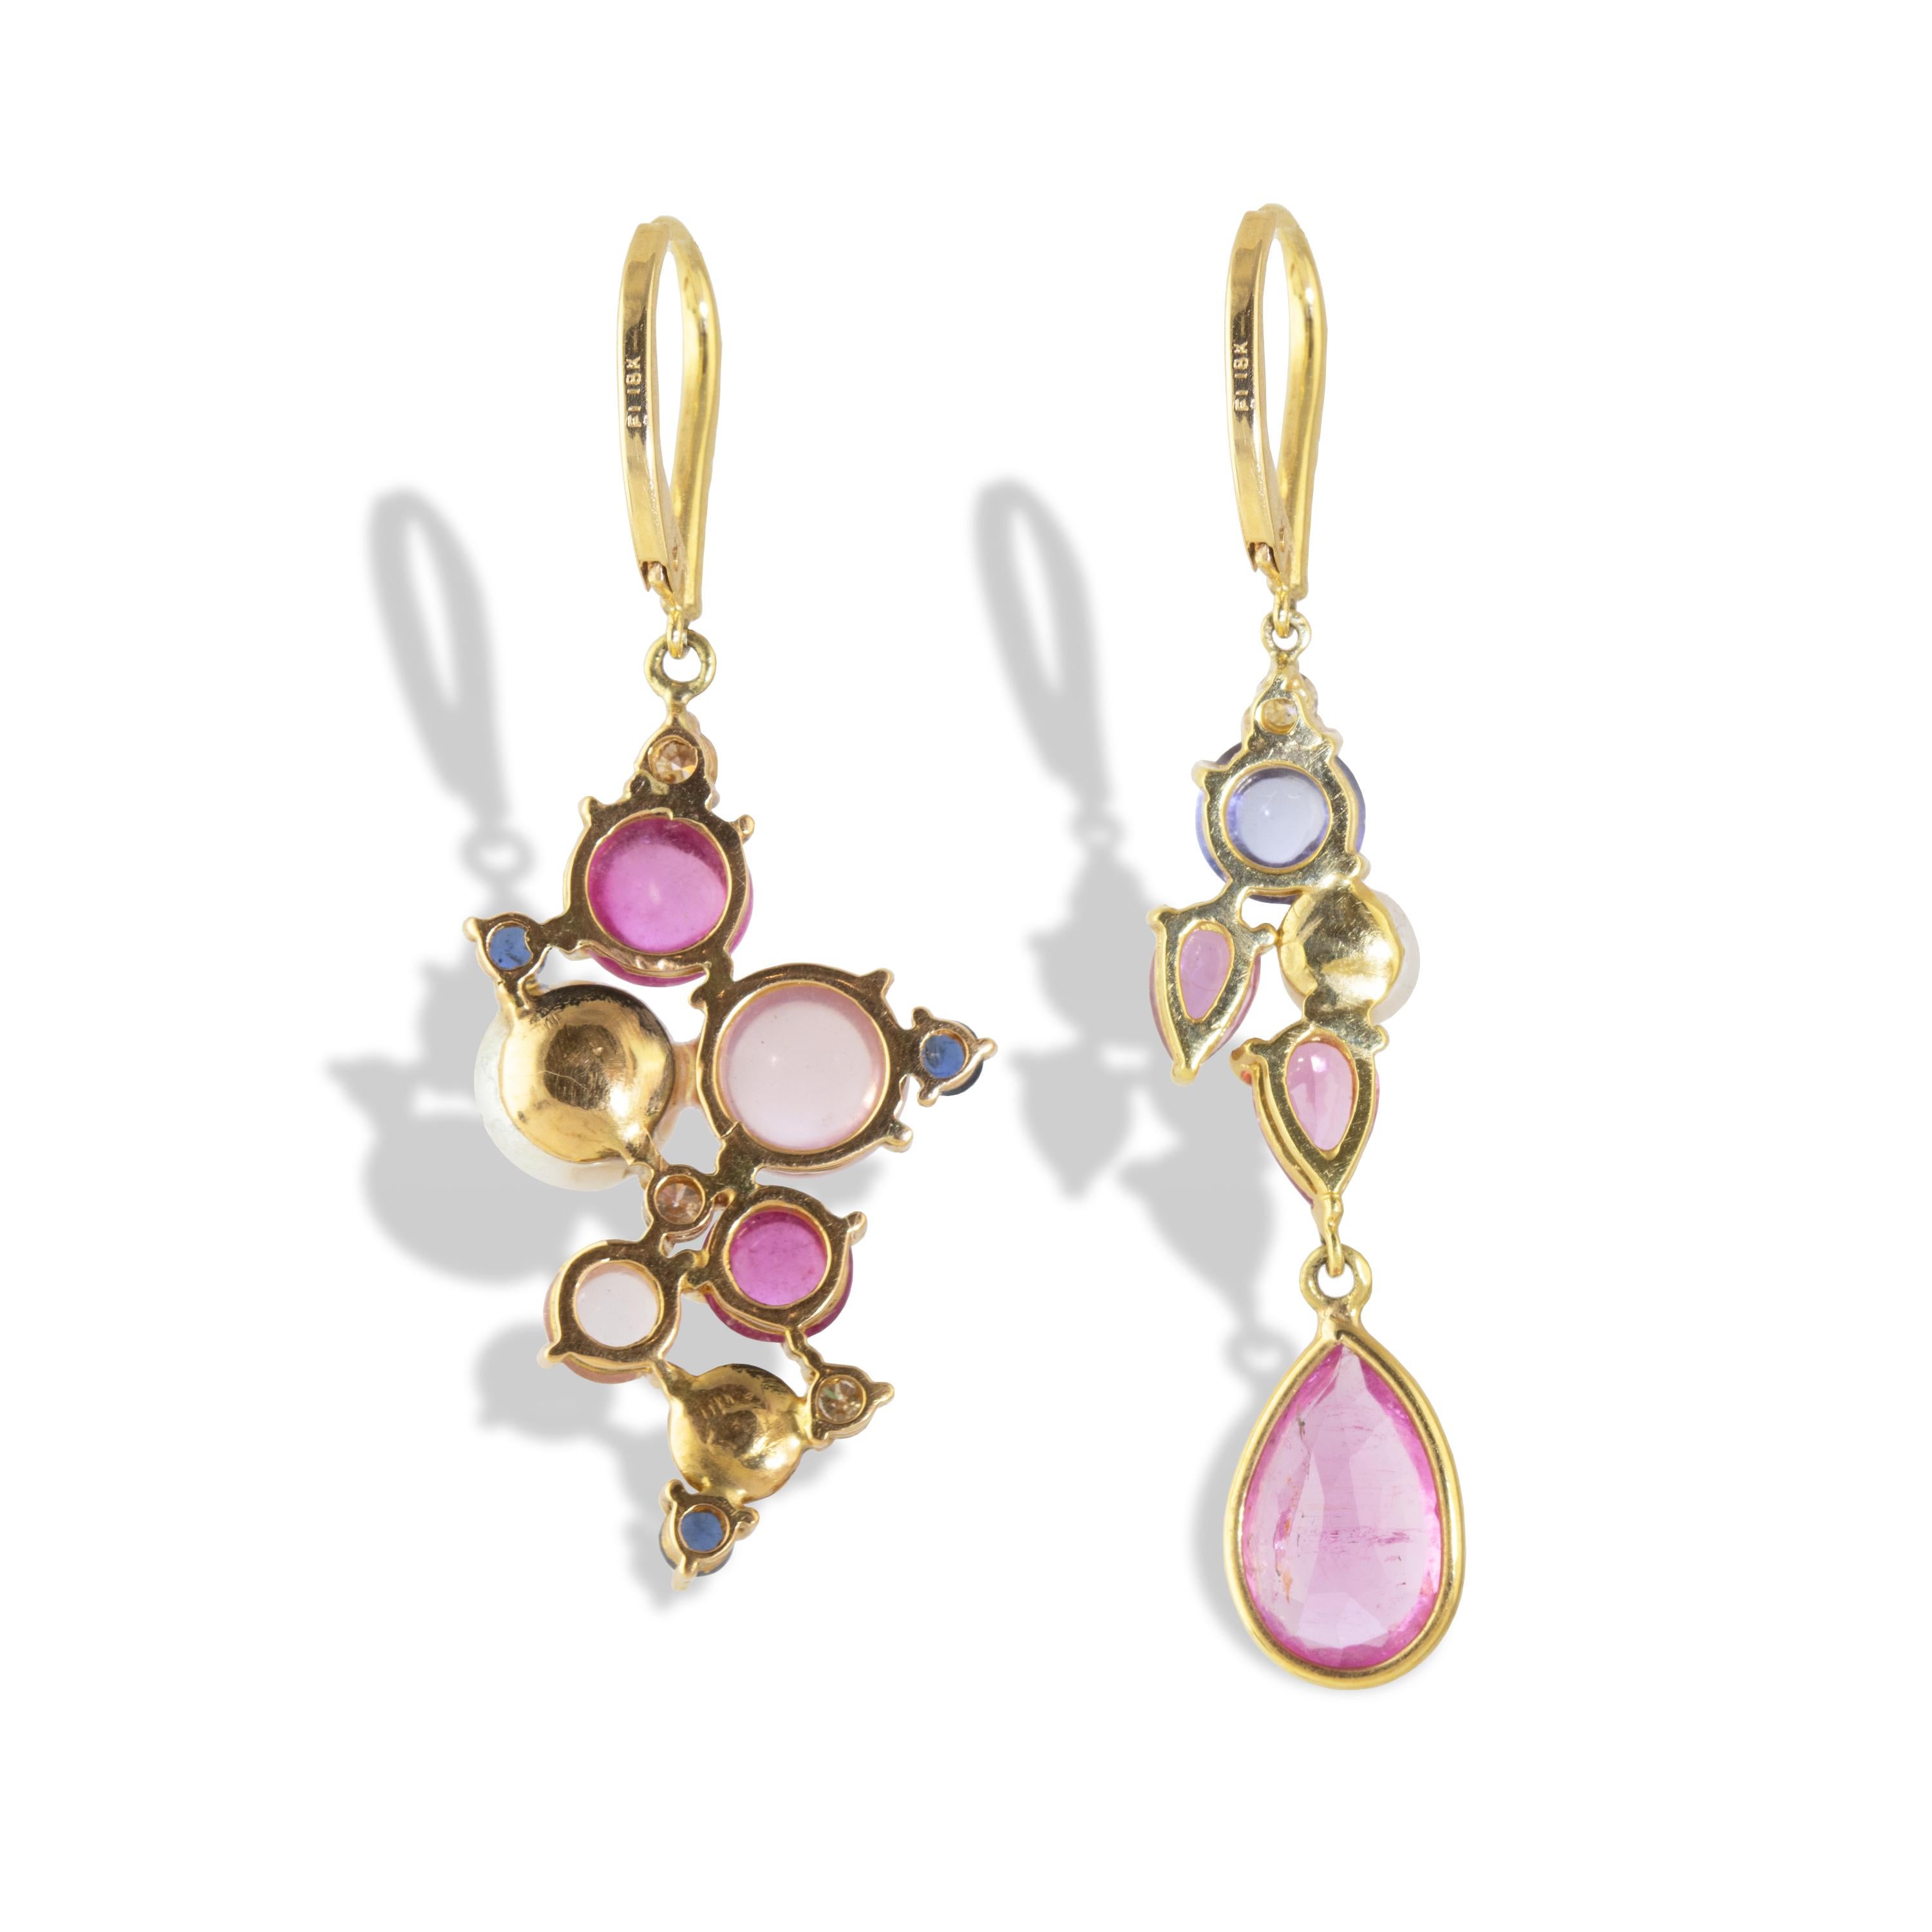 Contemporain Ico & the Bird Boucles d'oreilles en or 18 carats avec tourmaline rose, tanzanite, diamant et perle en vente